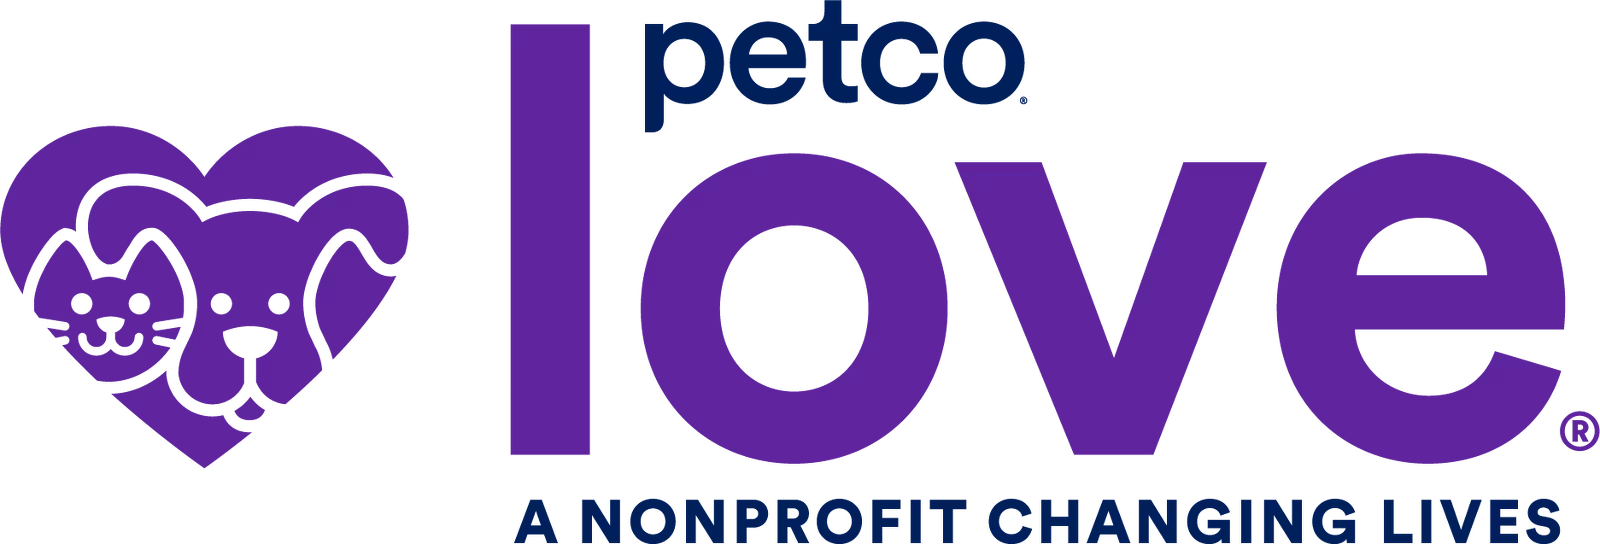 Petco love logo